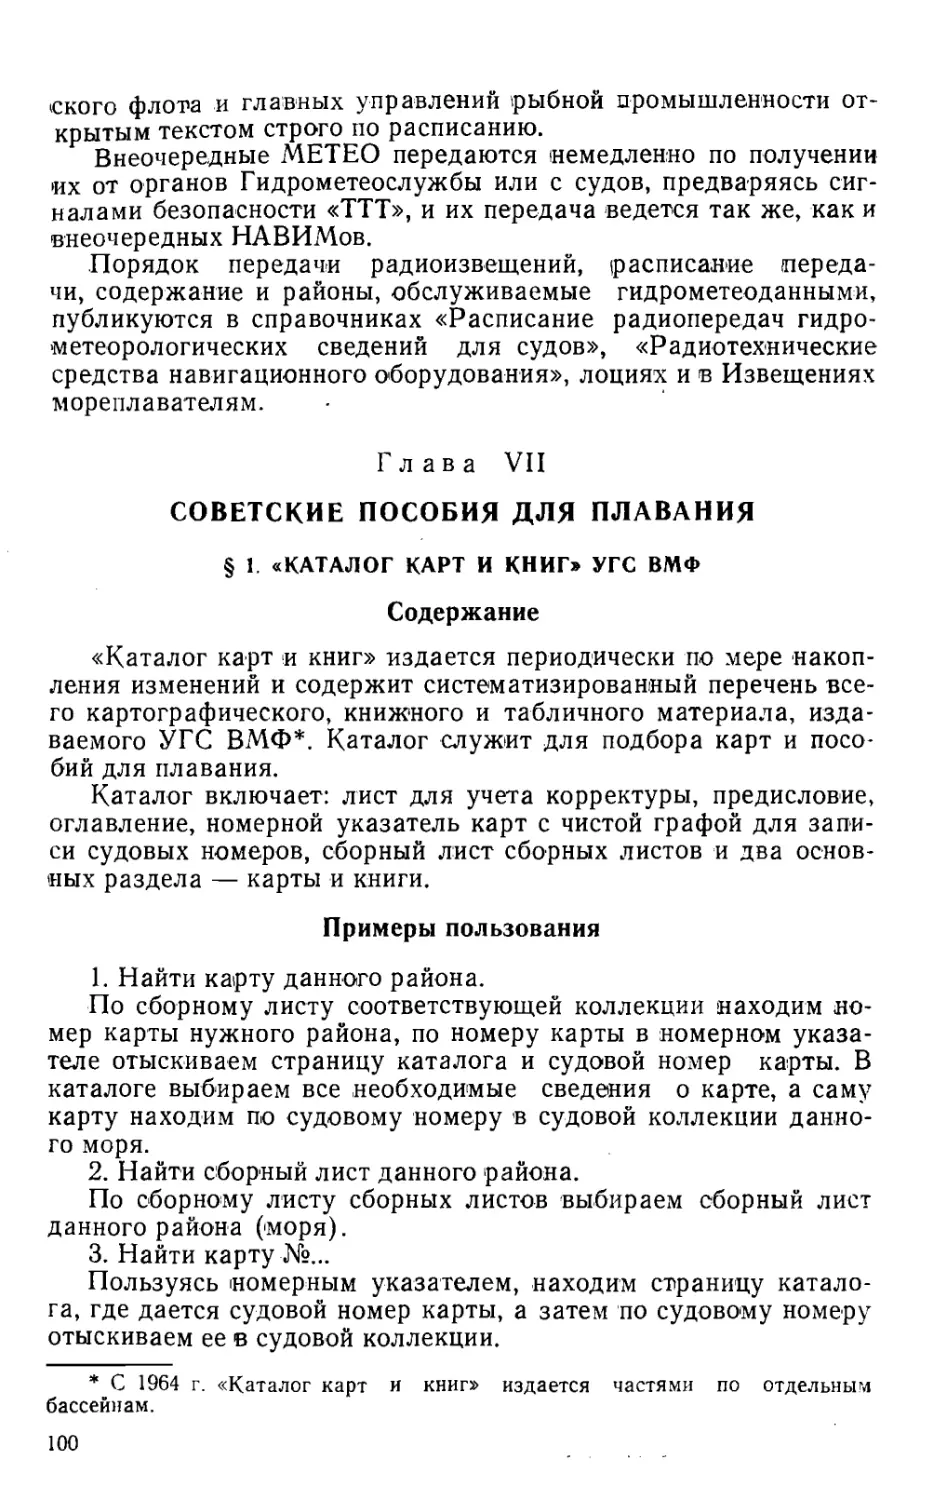 Глава 7. Советские пособия для плавания
1. "Каталог карт и книг" УГС ВМФ